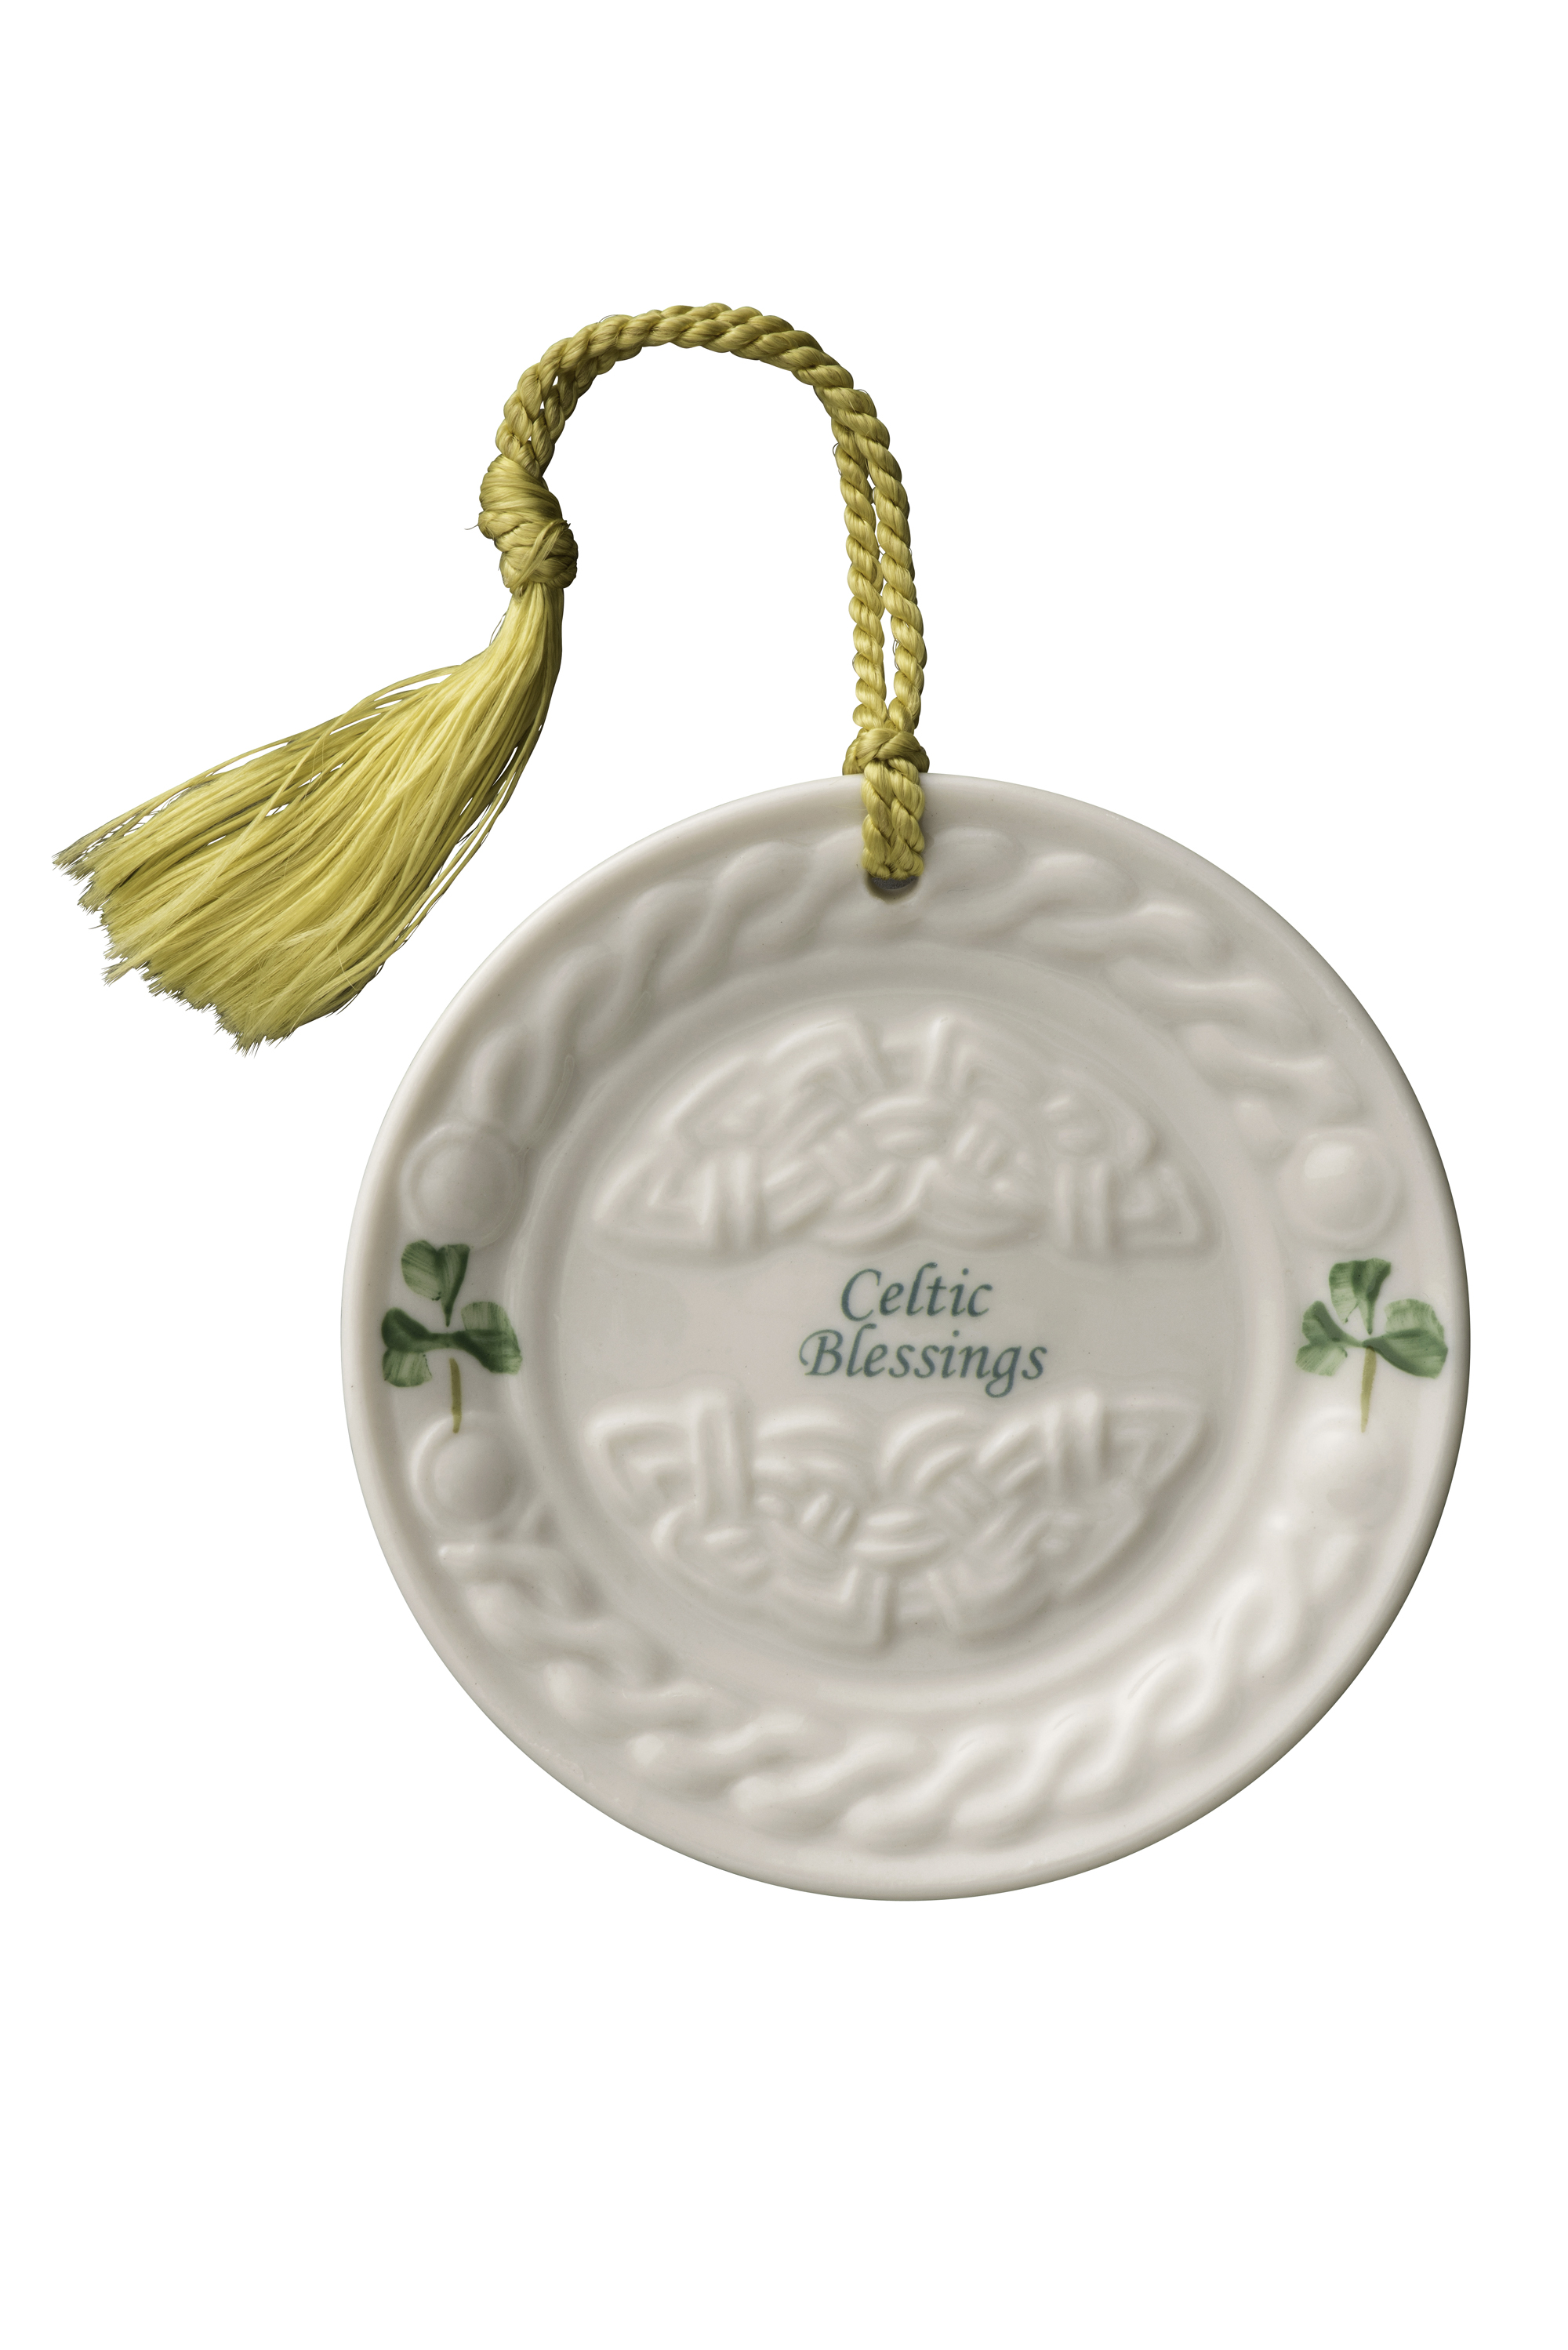 Product image for Irish Christmas - Belleek Celtic Blessing Ornament